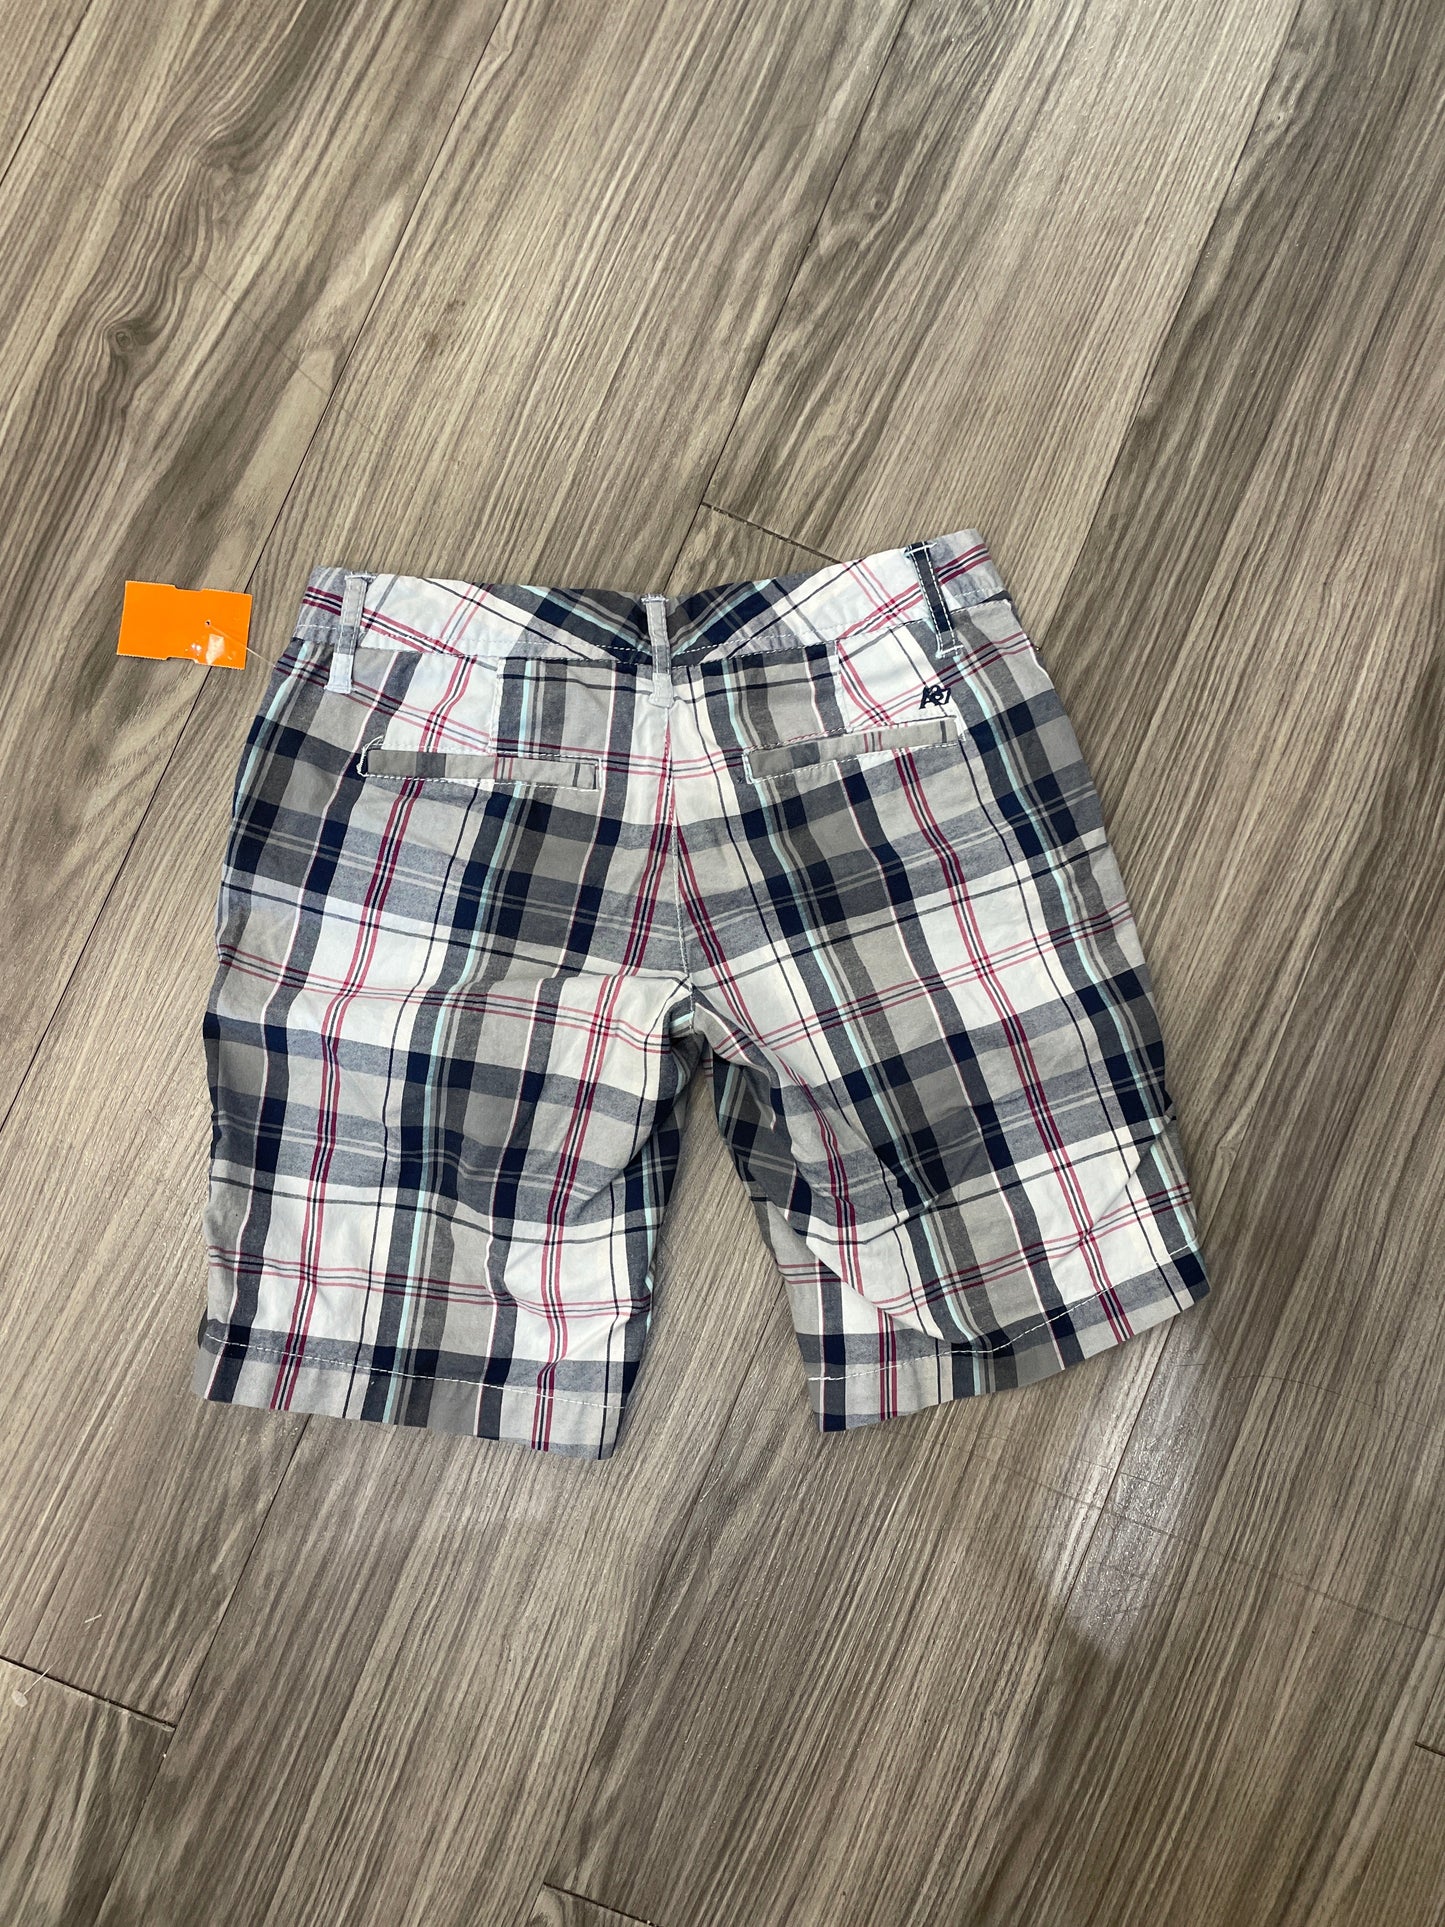 Shorts By Aeropostale  Size: 00